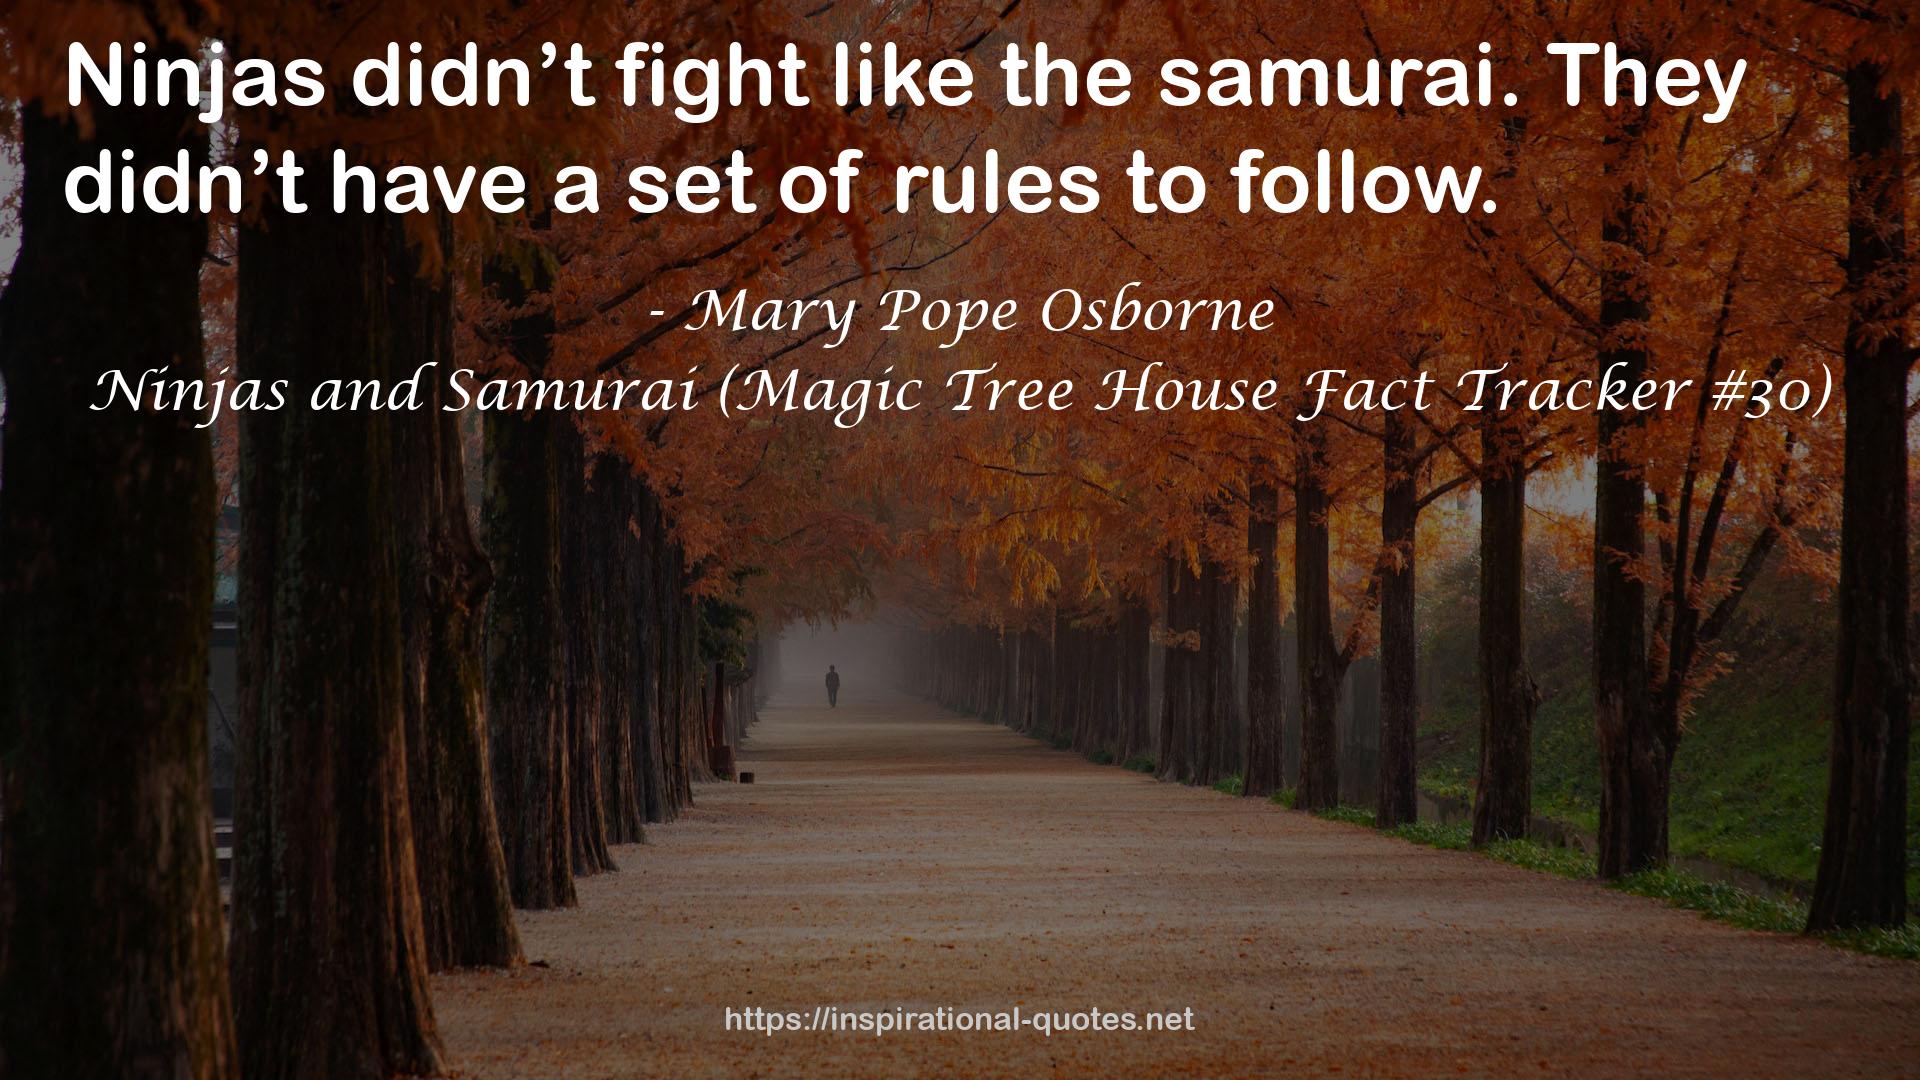 Ninjas and Samurai (Magic Tree House Fact Tracker #30) QUOTES